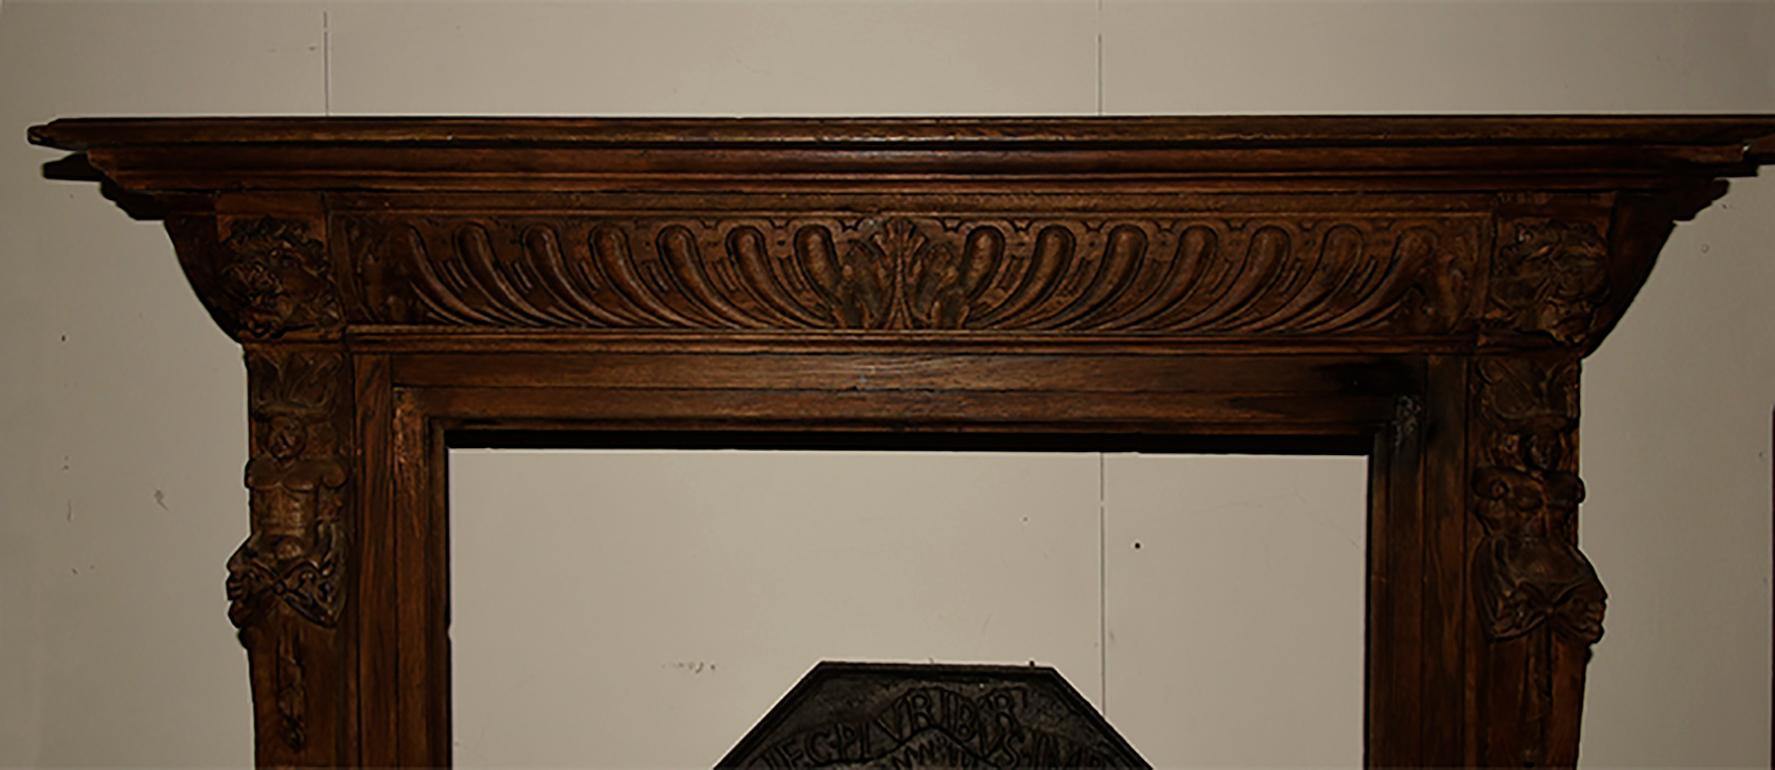 Belgian Antique Wooden Fireplace Mantel, 19th Century